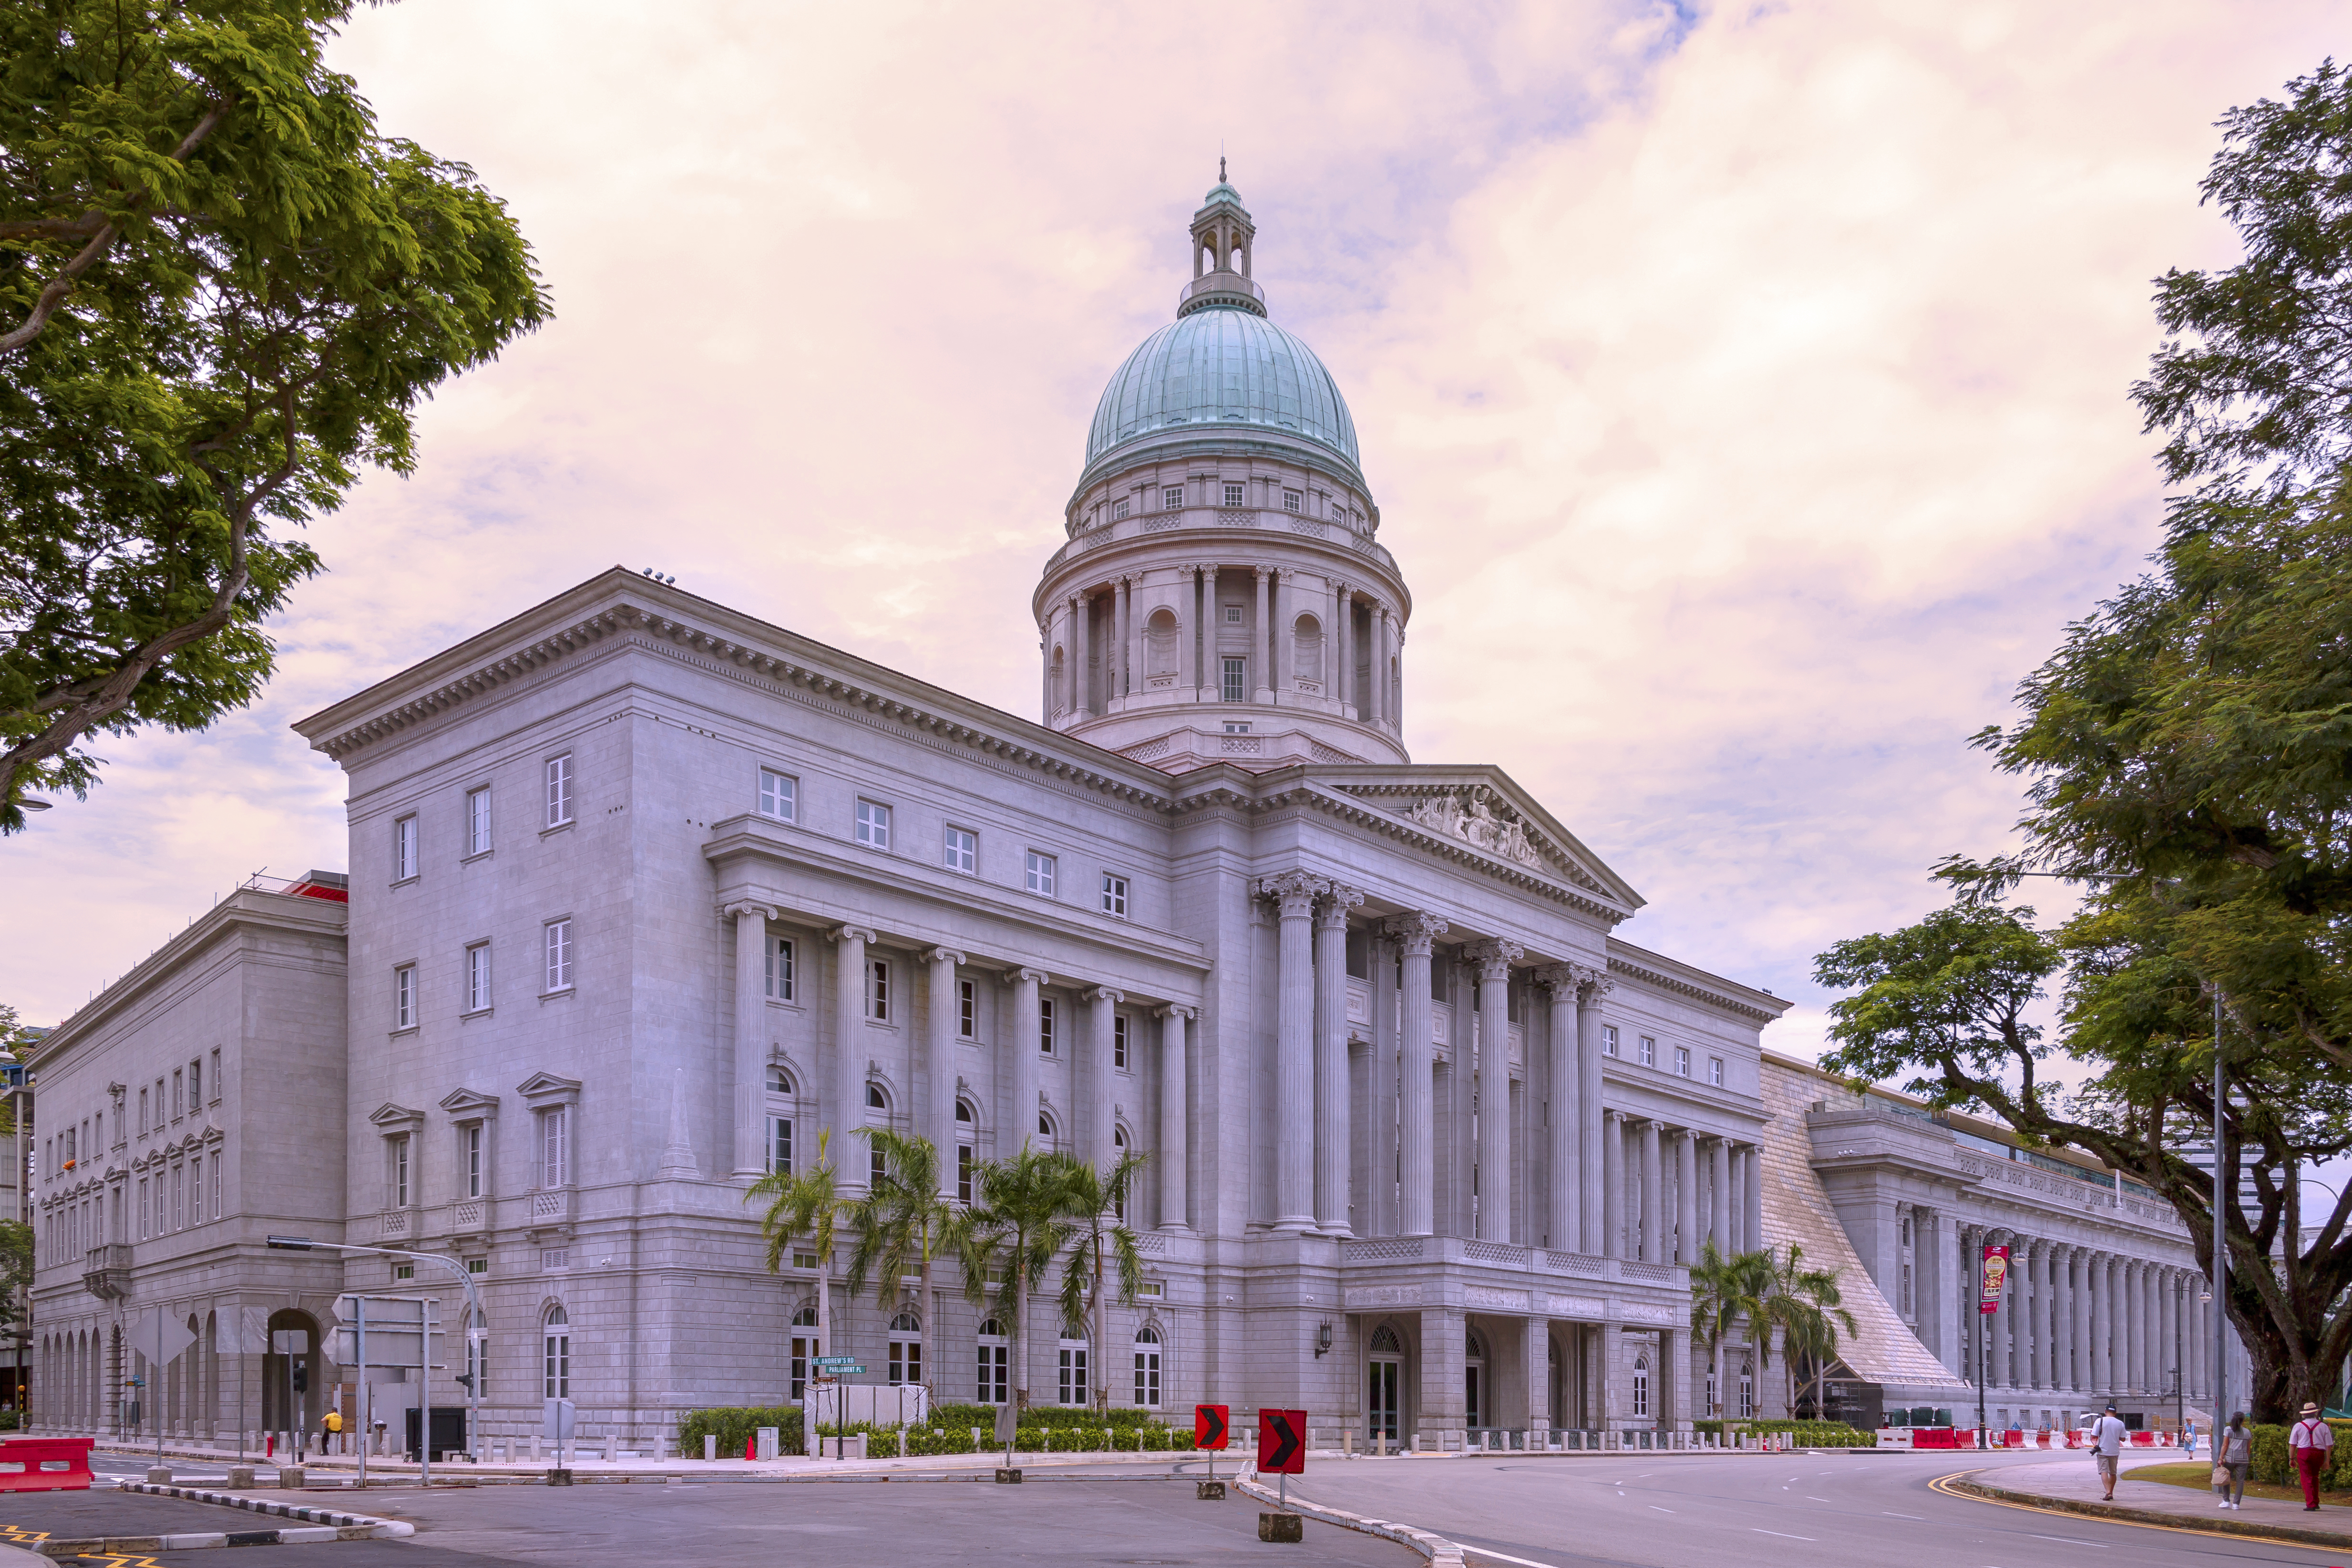 Tòa án Tối cao cũ - Old Supreme Court of Singapore - Singapore - Singapore